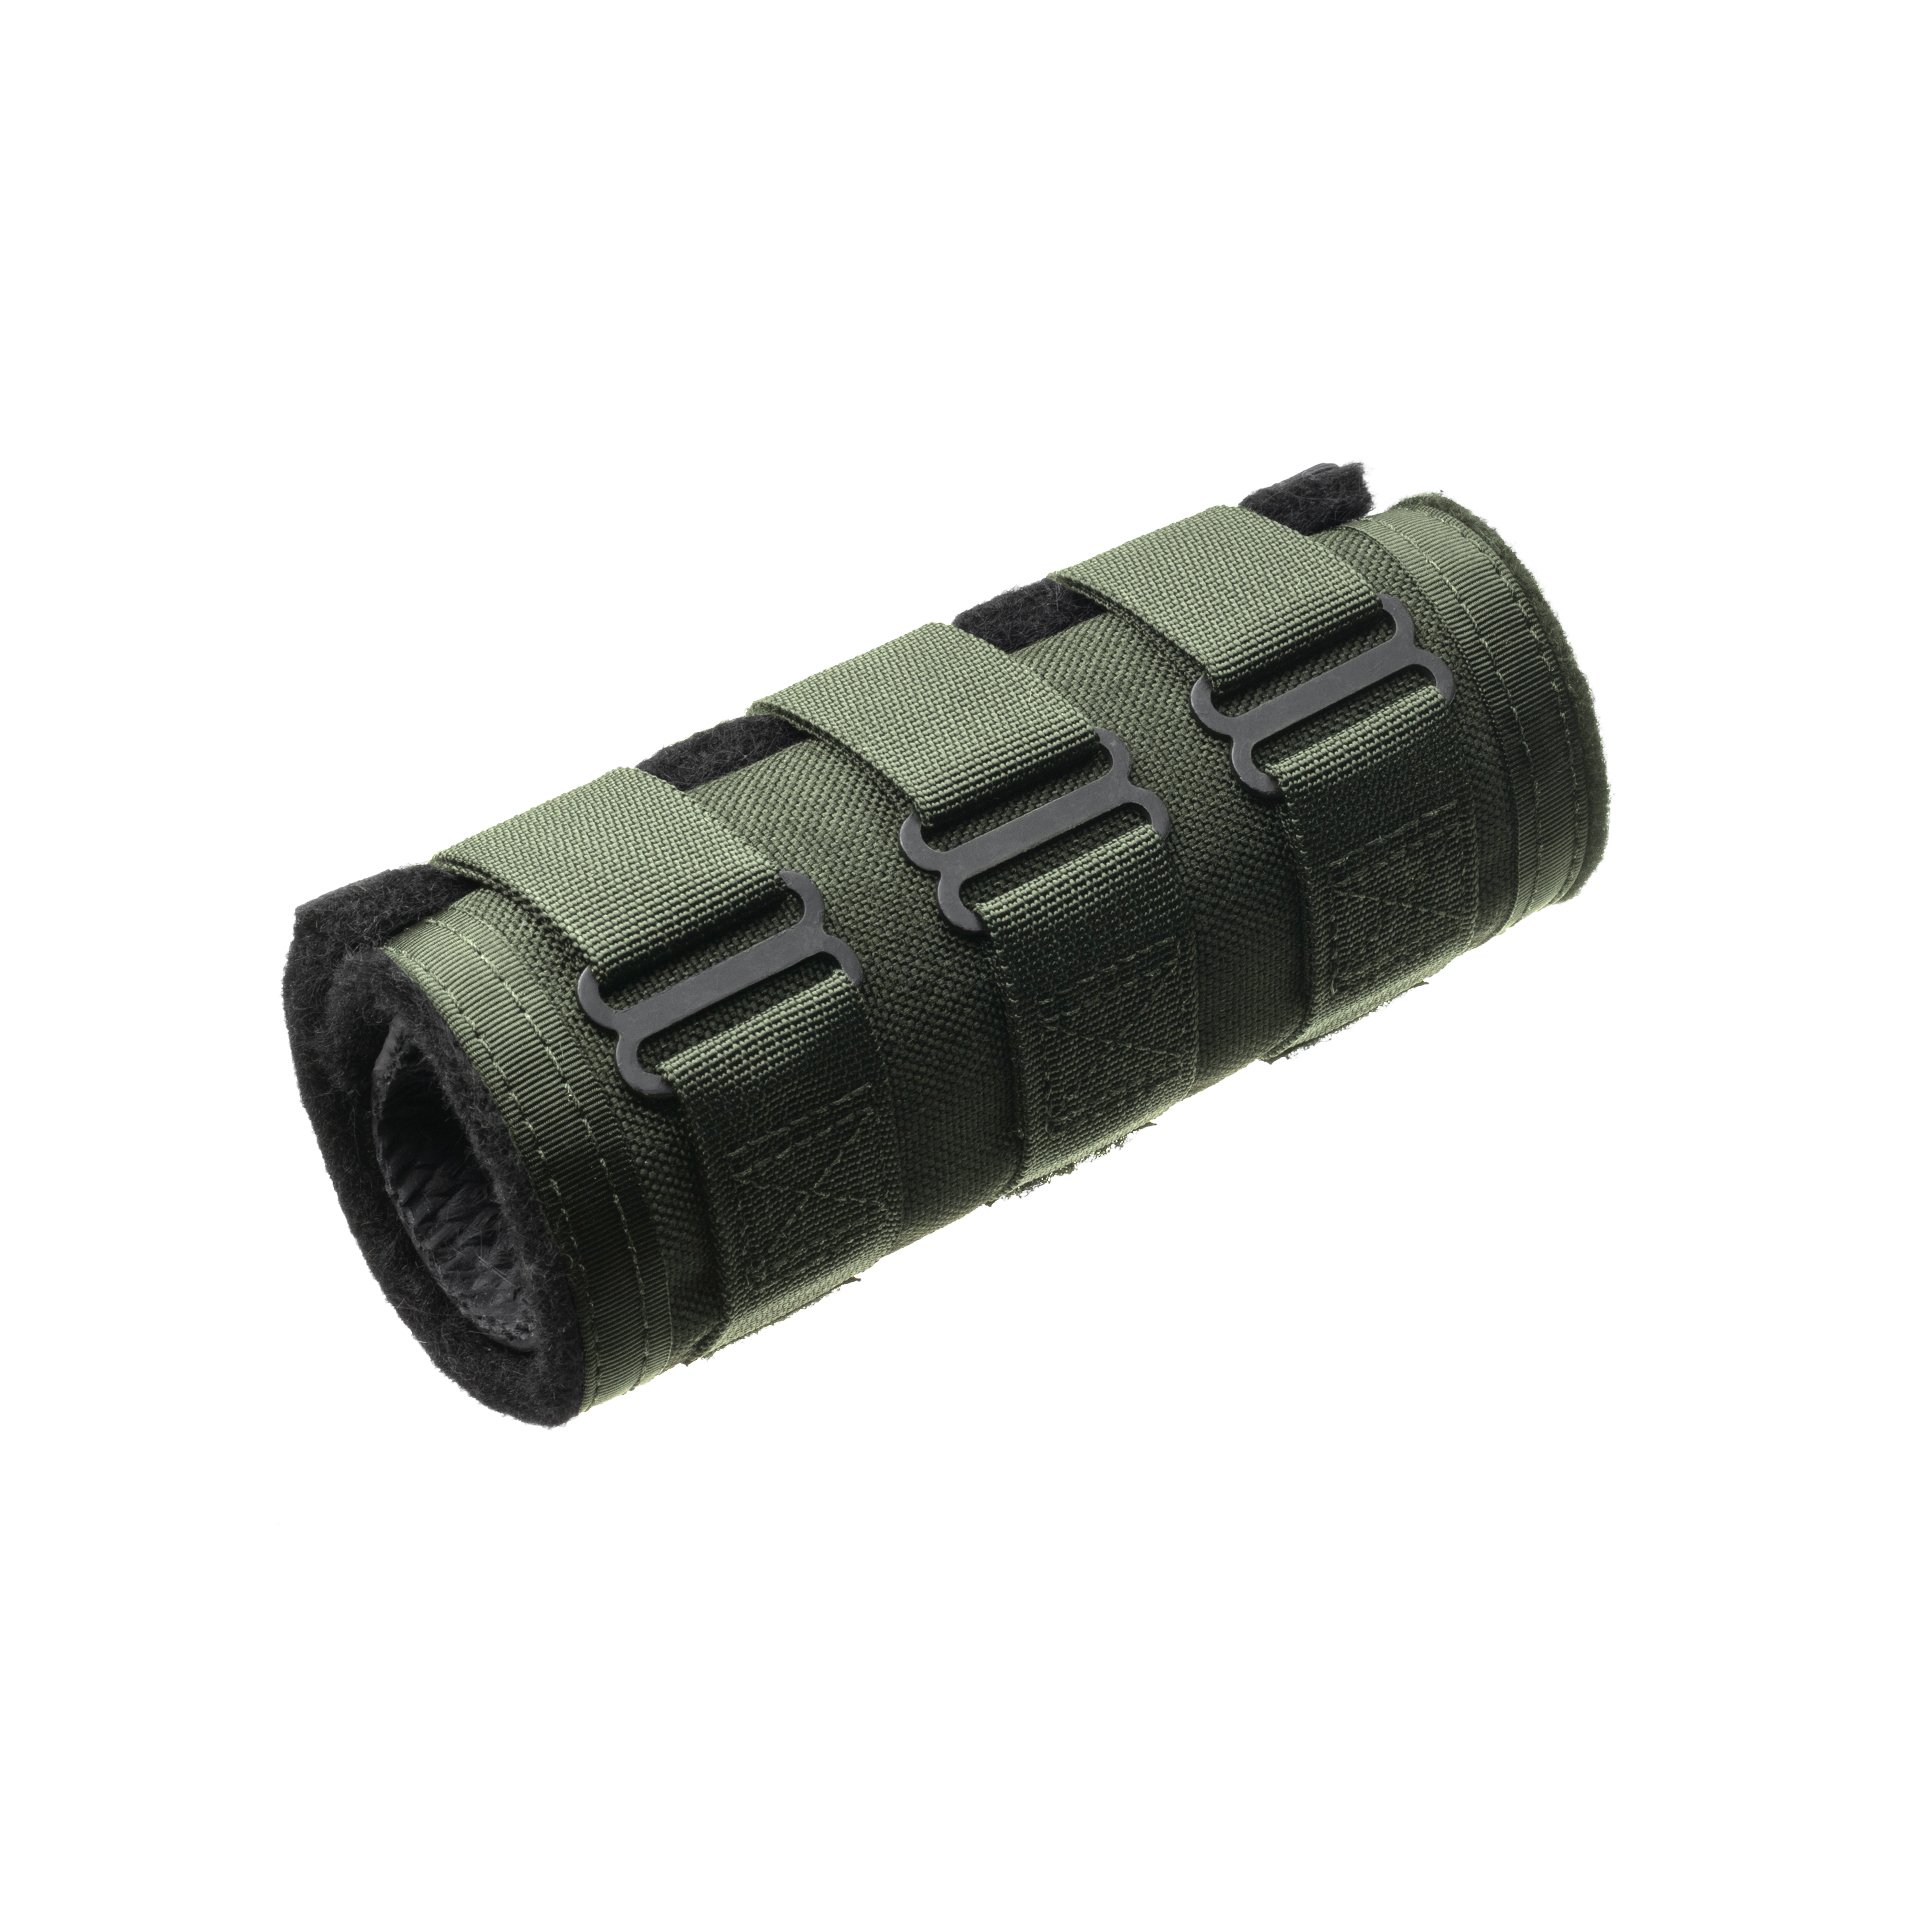 HIGH TEMP Subtac ALPHA suppressor Cover Kit 6 INCH black silencerco Silencer 